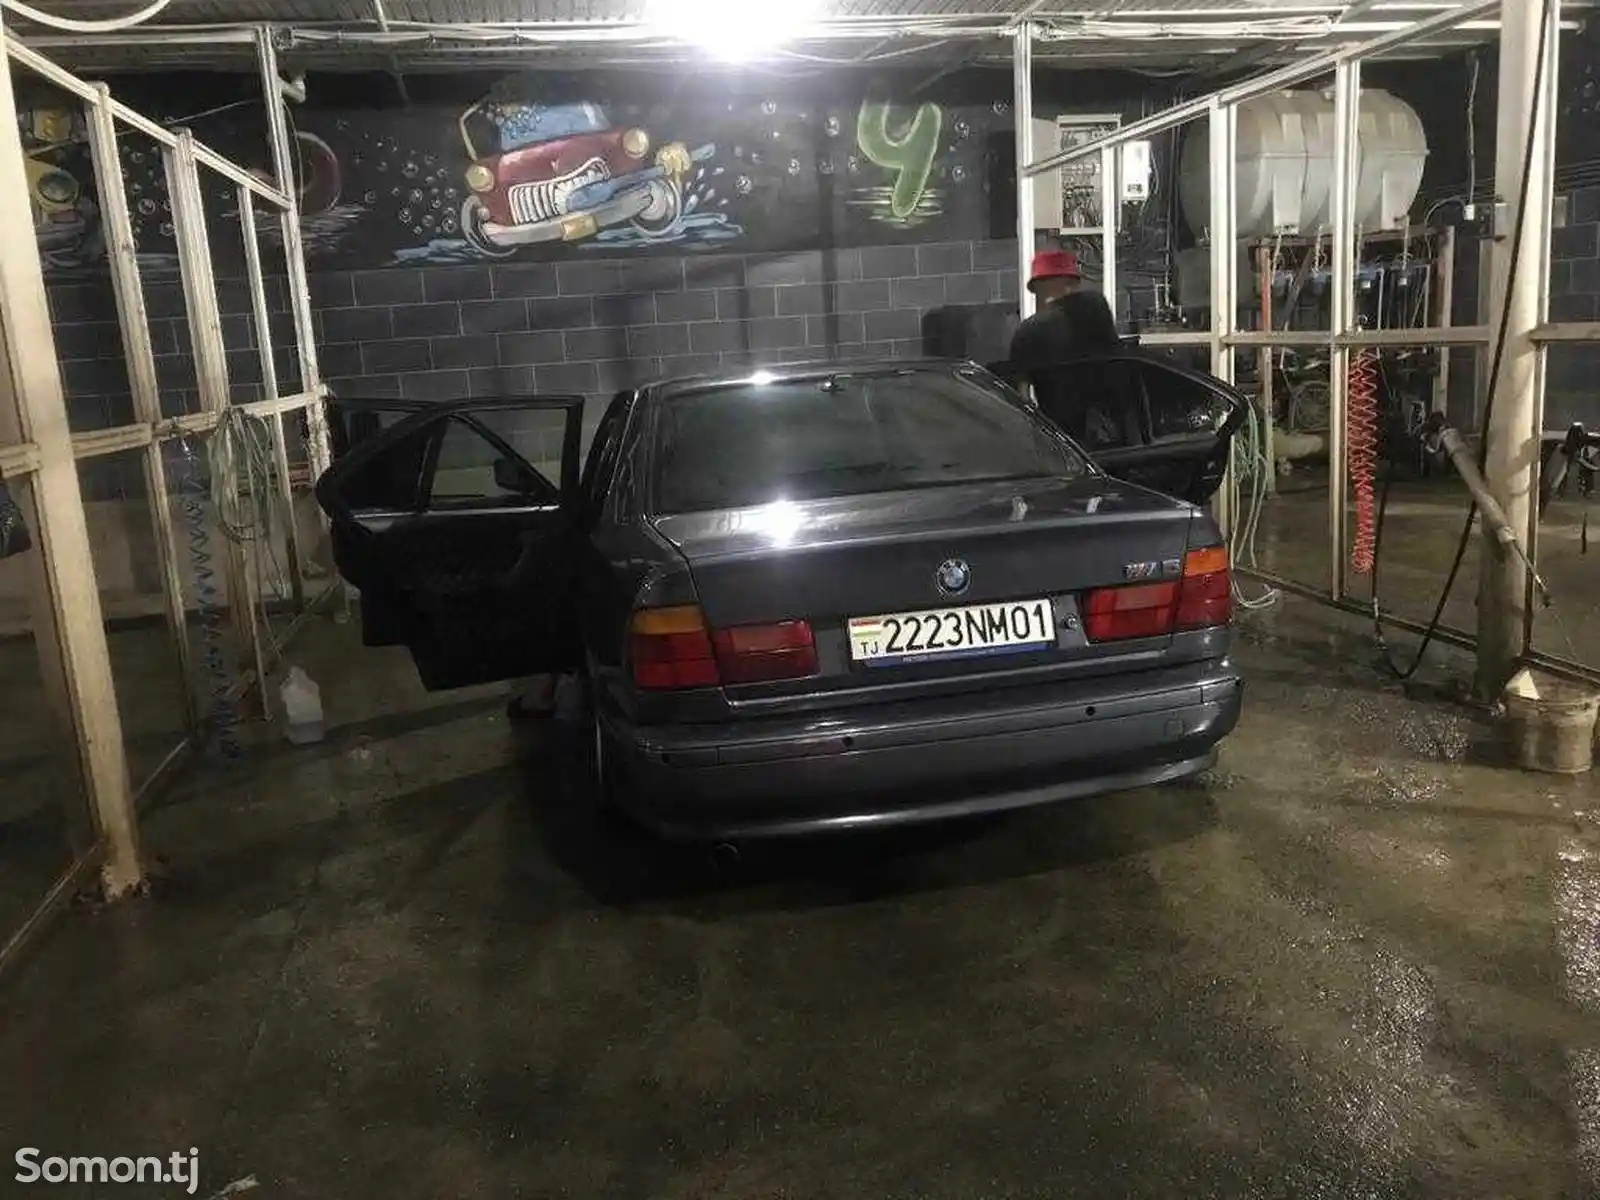 BMW 5 series, 1992-2